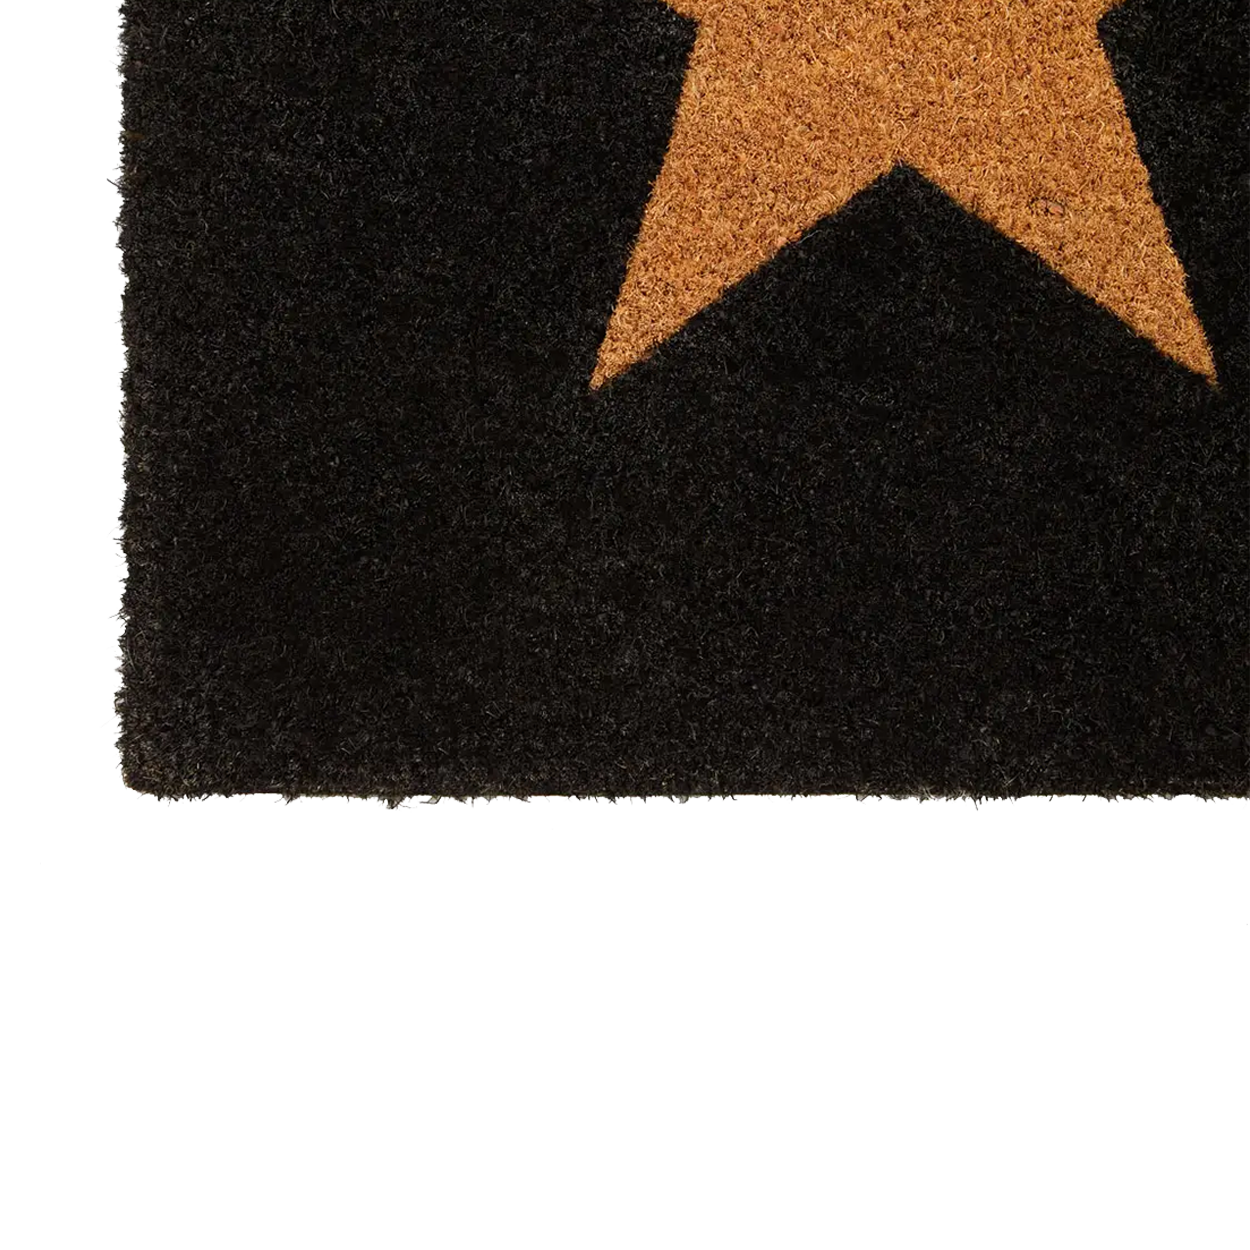 Three Stars Large Doormat